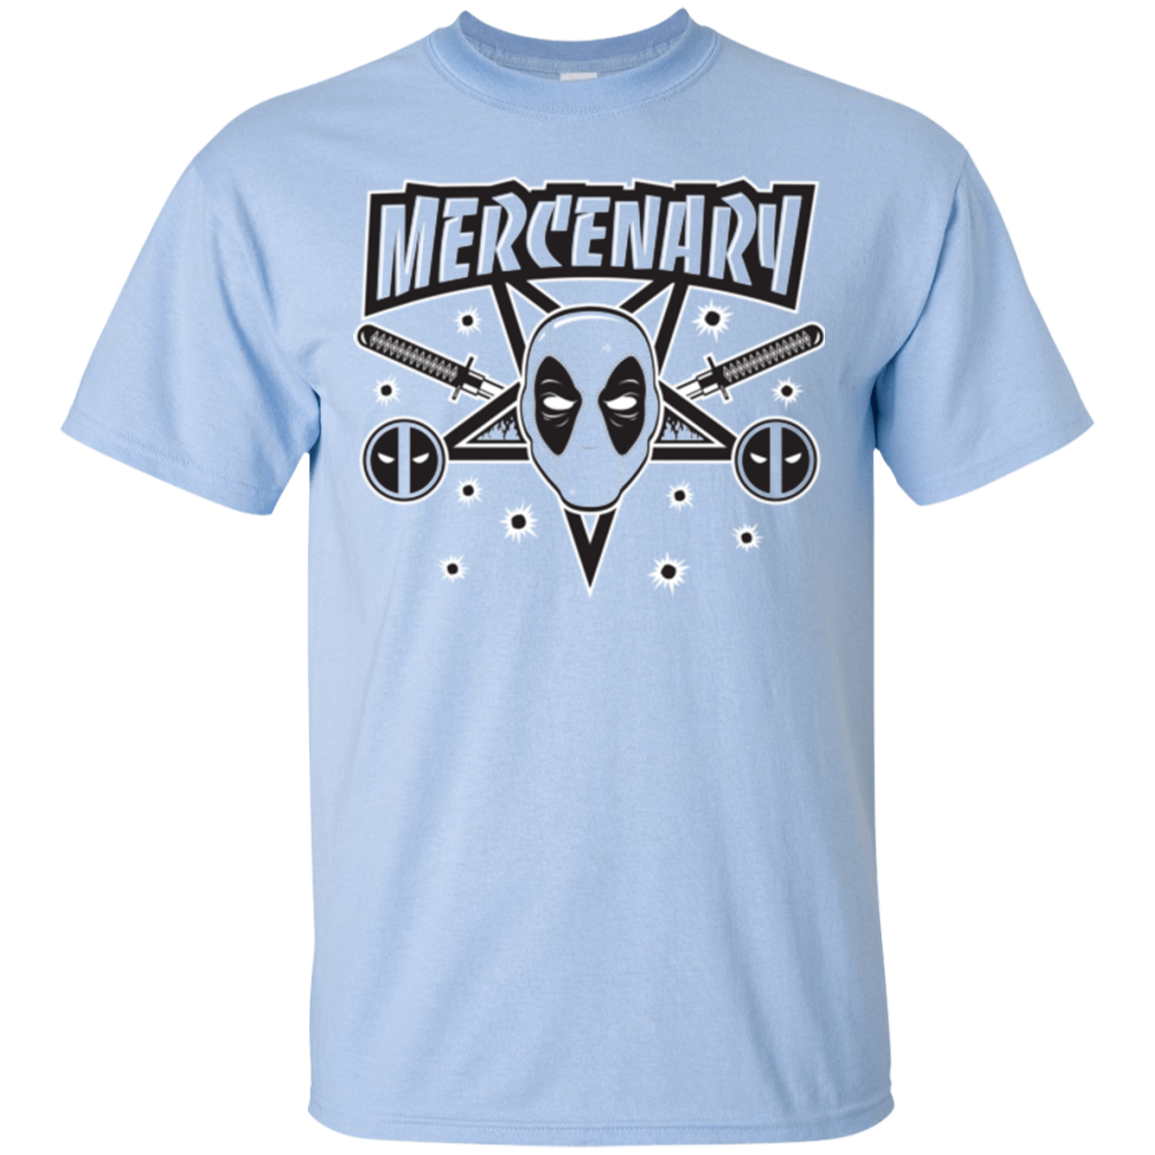 Mercenary (1) T-Shirt